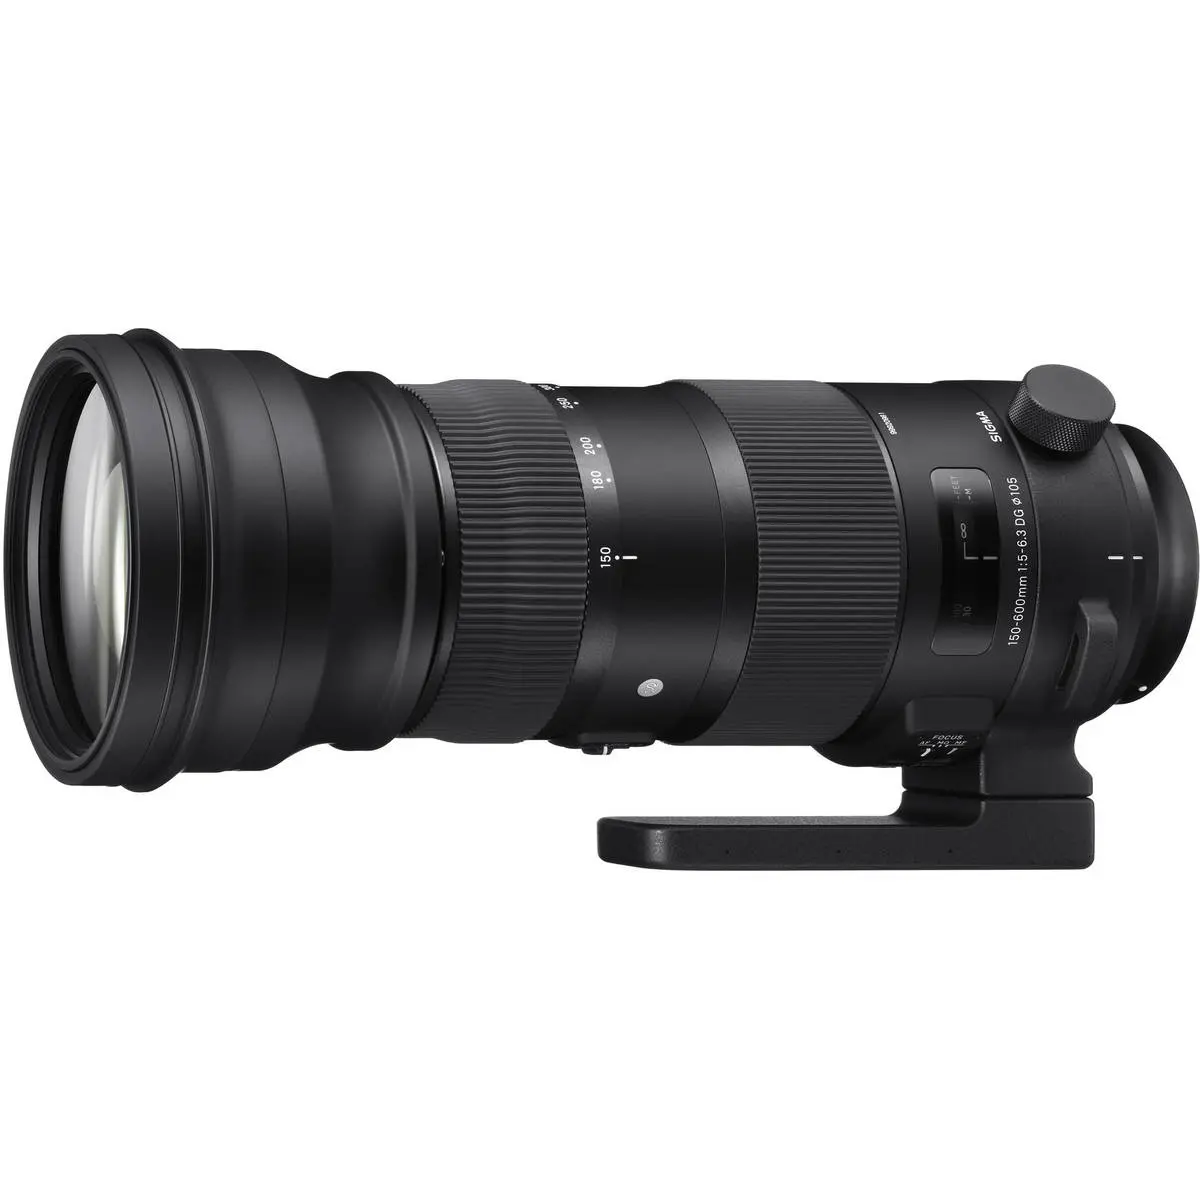 Main Image Sigma 150-600mm f/5-6.3 DG OS HSM | Sport (Nikon) Lens